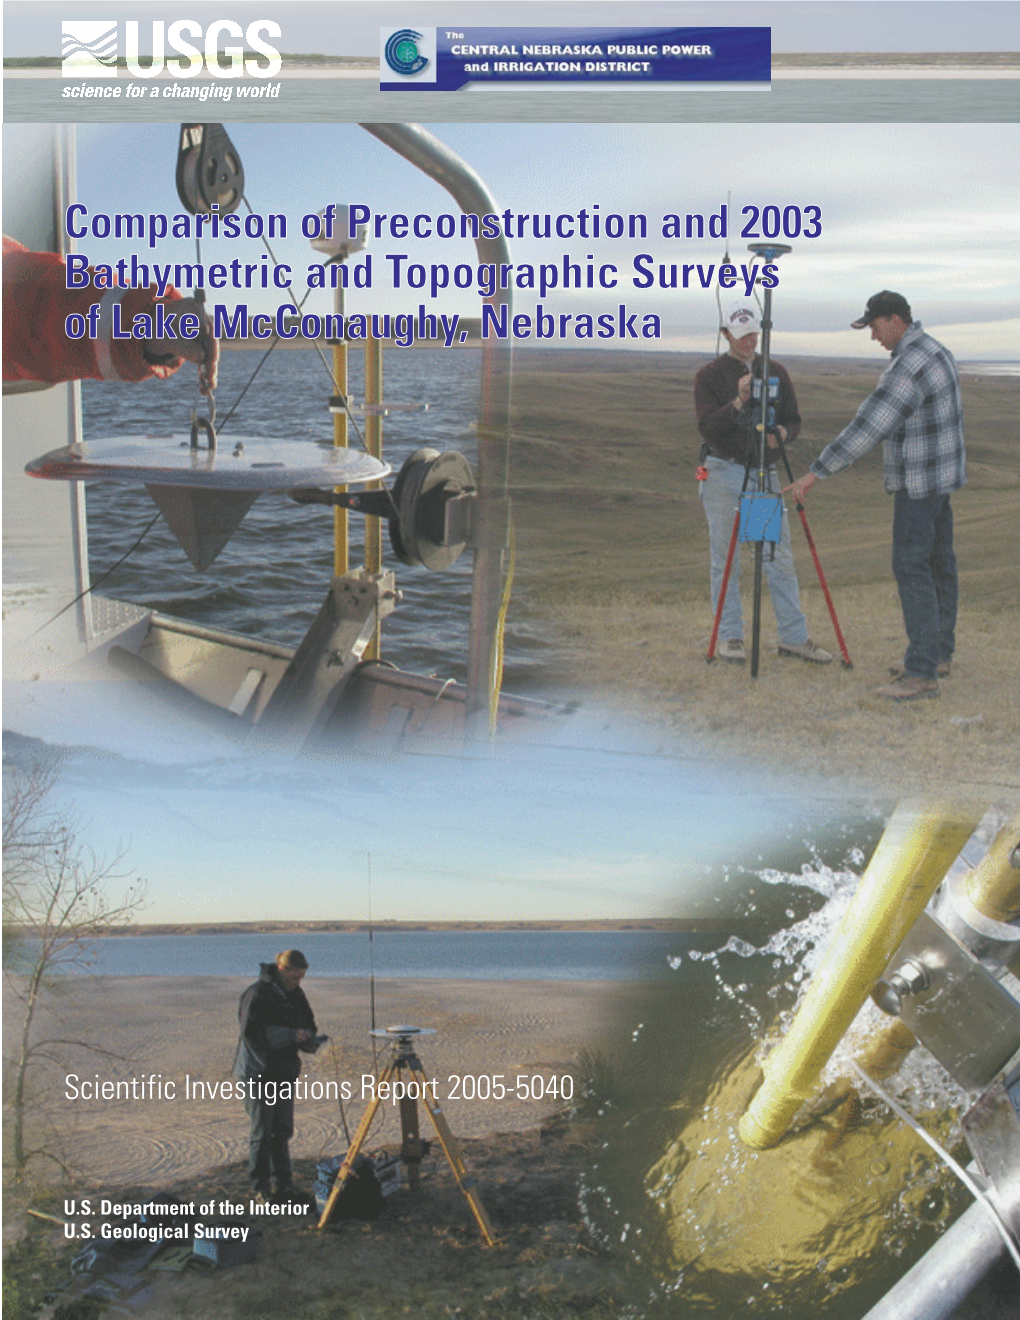 Comparison of Preconstruction and 2003 Bathymetric and Topographic Surveys of Lake Mcconaughy, Nebraska